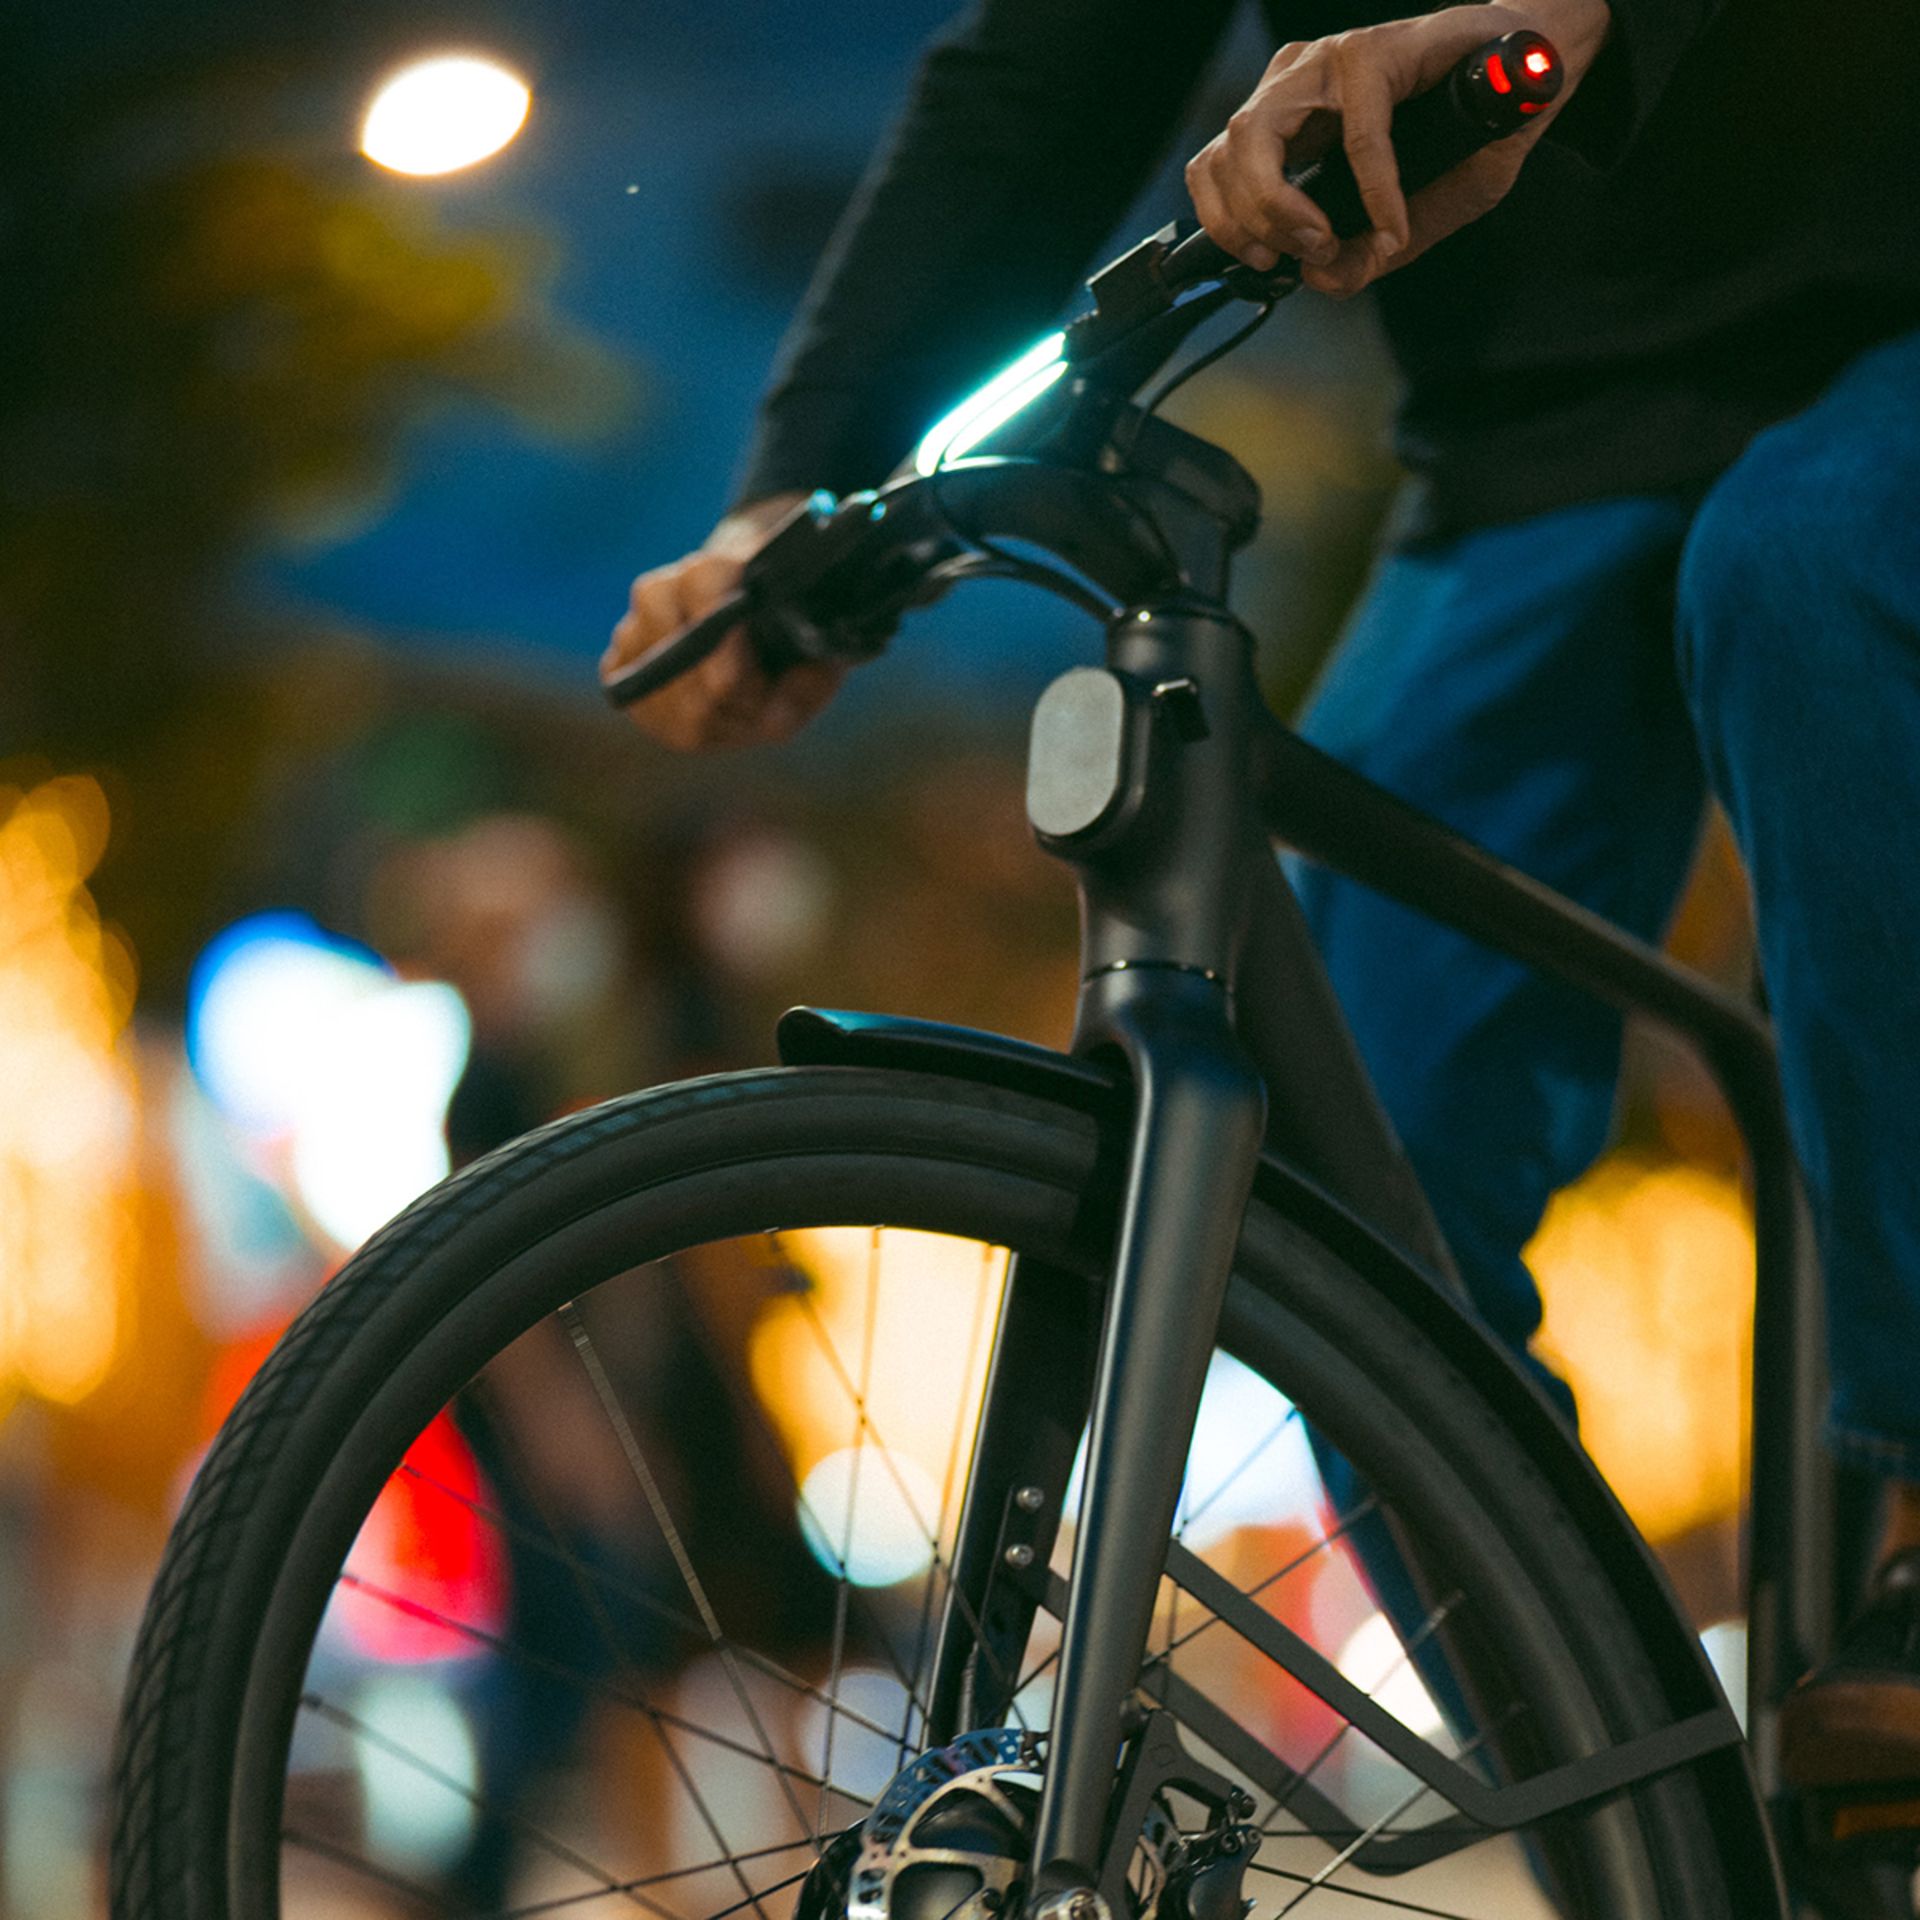 Modmo Saigon+ Electric Bicycle - RRP £2800 - Size L (Rider 175-190cm) - Image 9 of 19